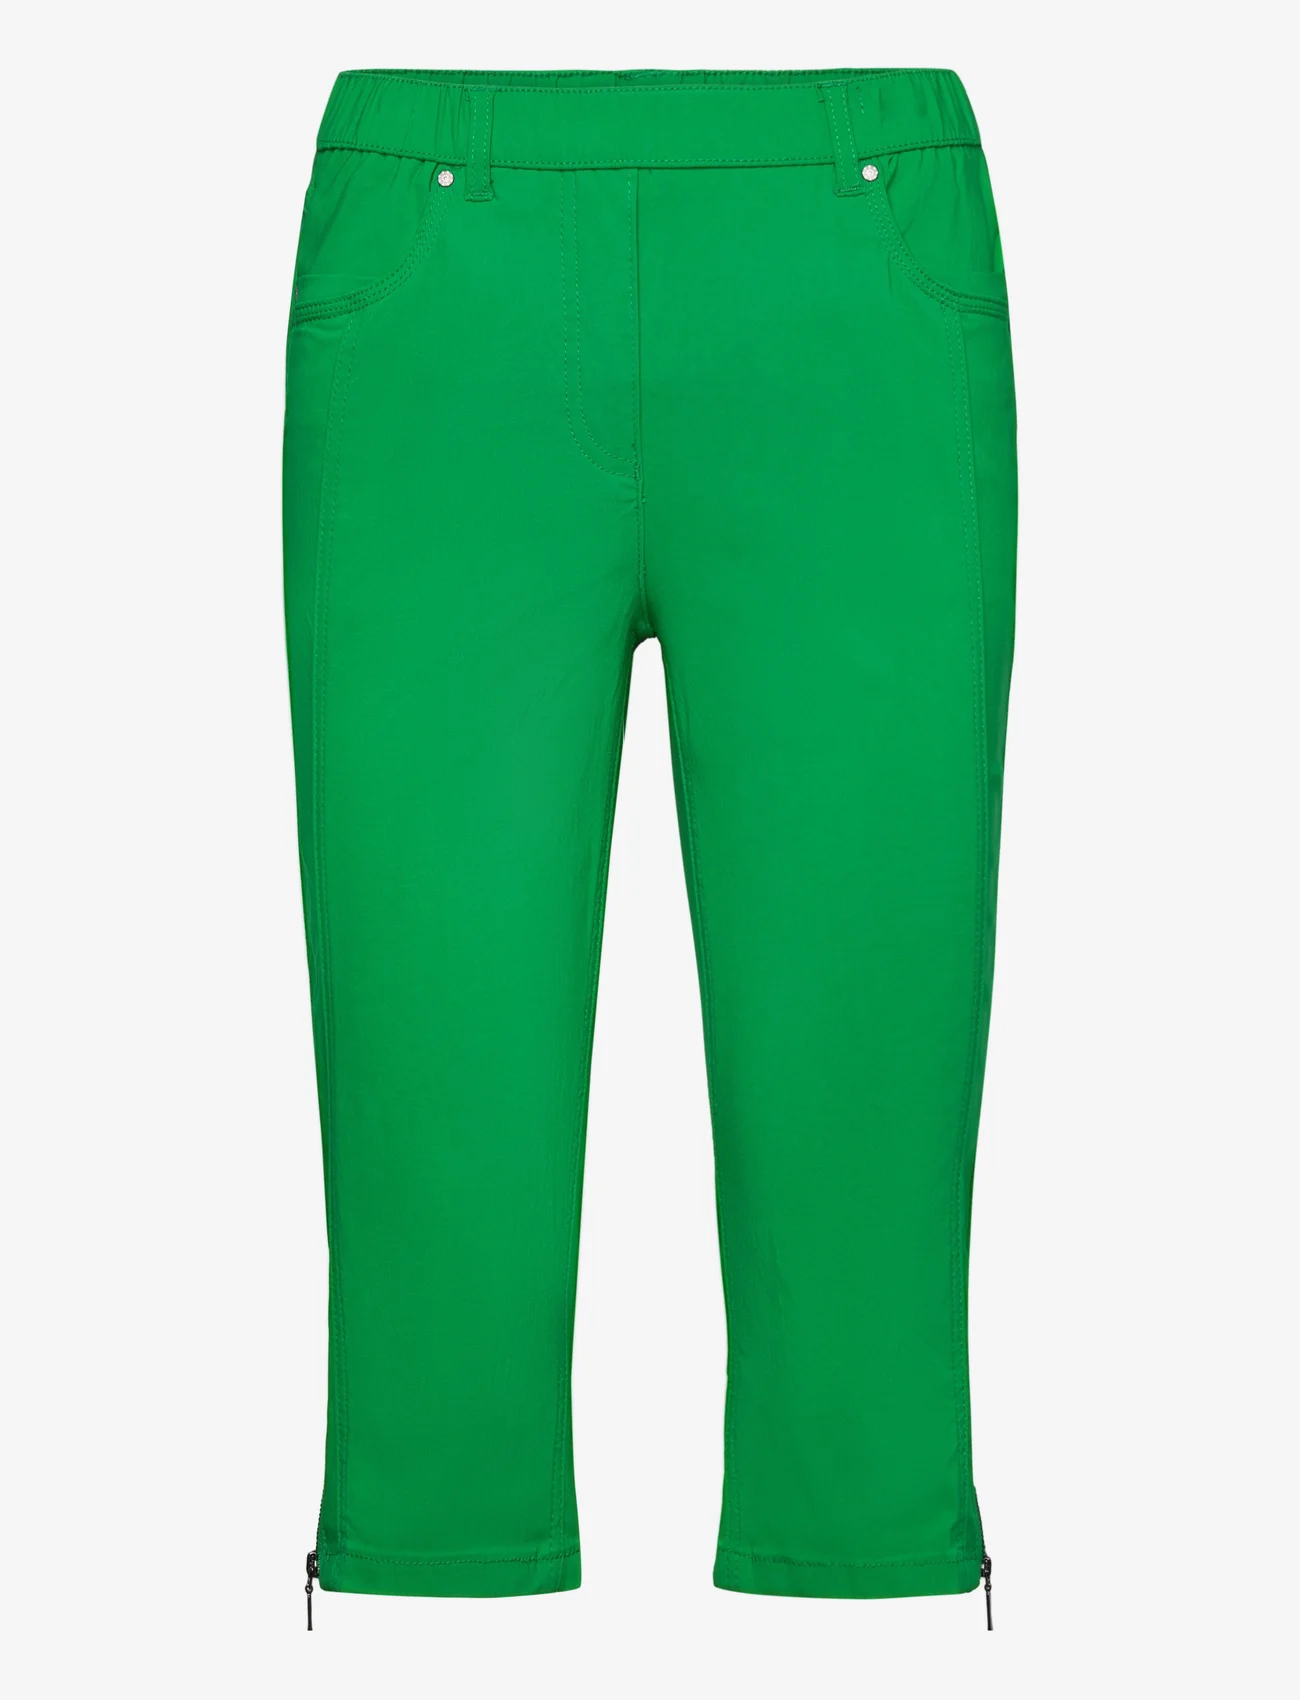 Brandtex - Capri pants - caprihose - bright green - 0